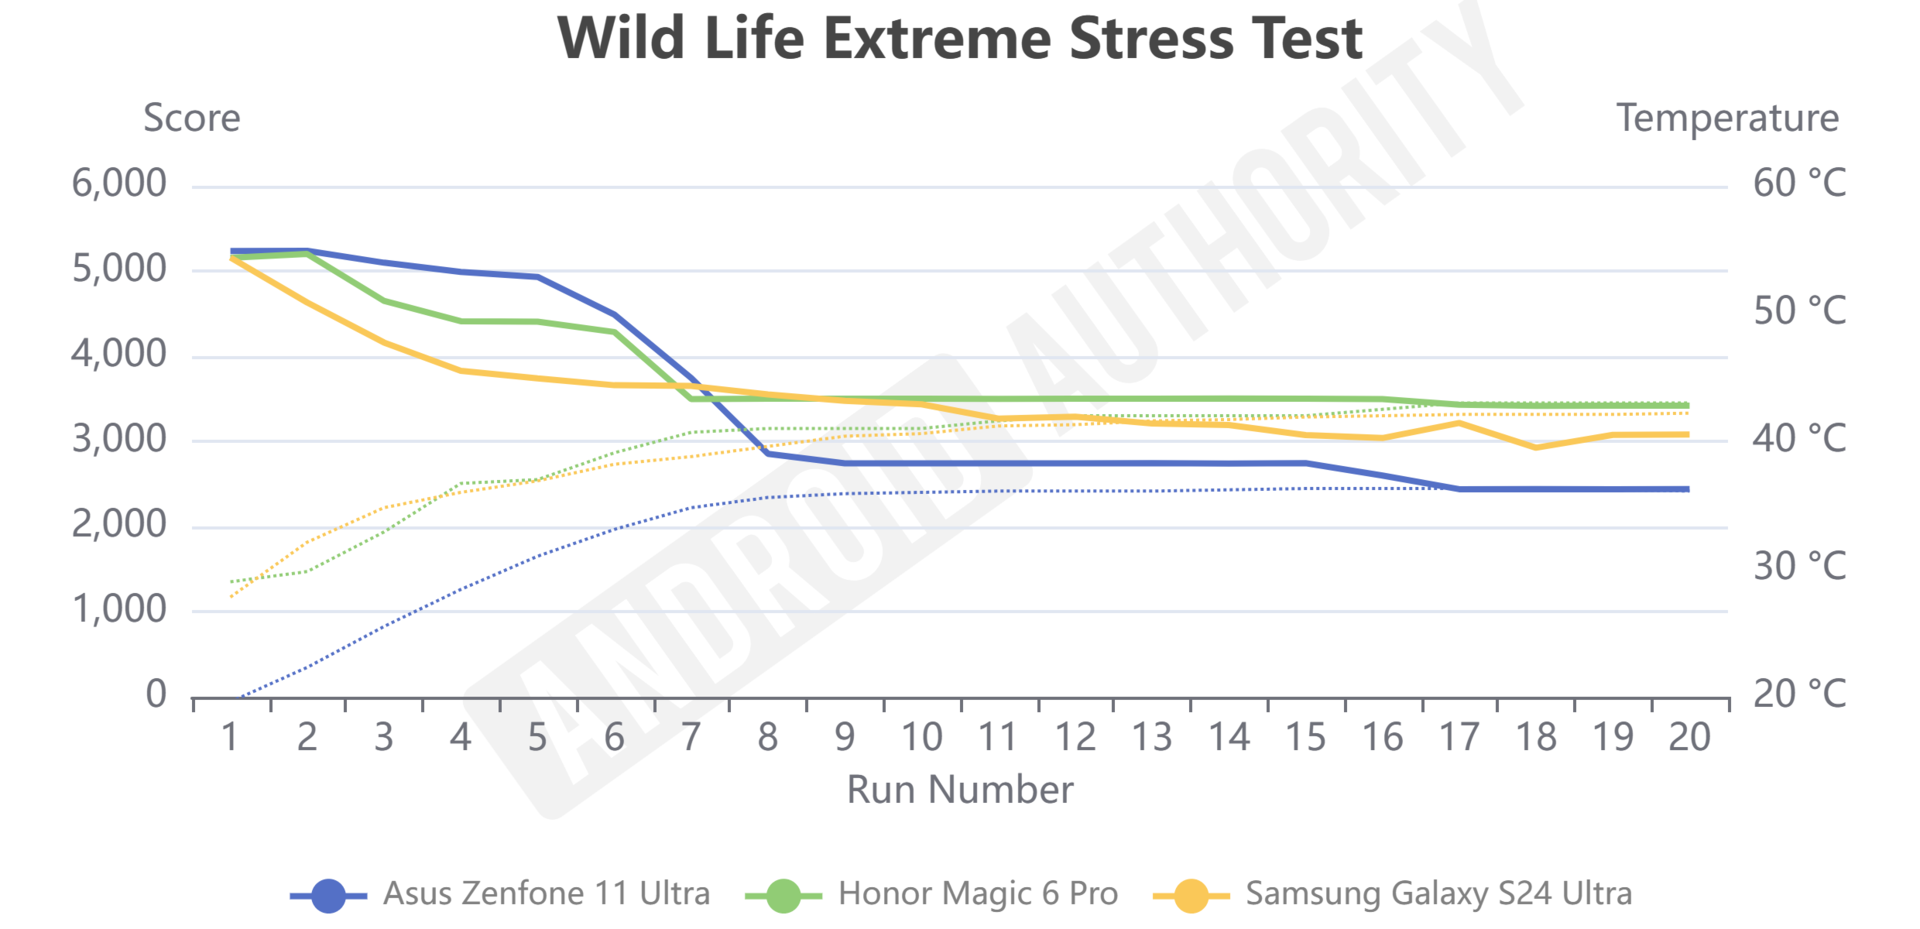 HONOR Magic 6 Pro Wild Life Extreme Stress Test